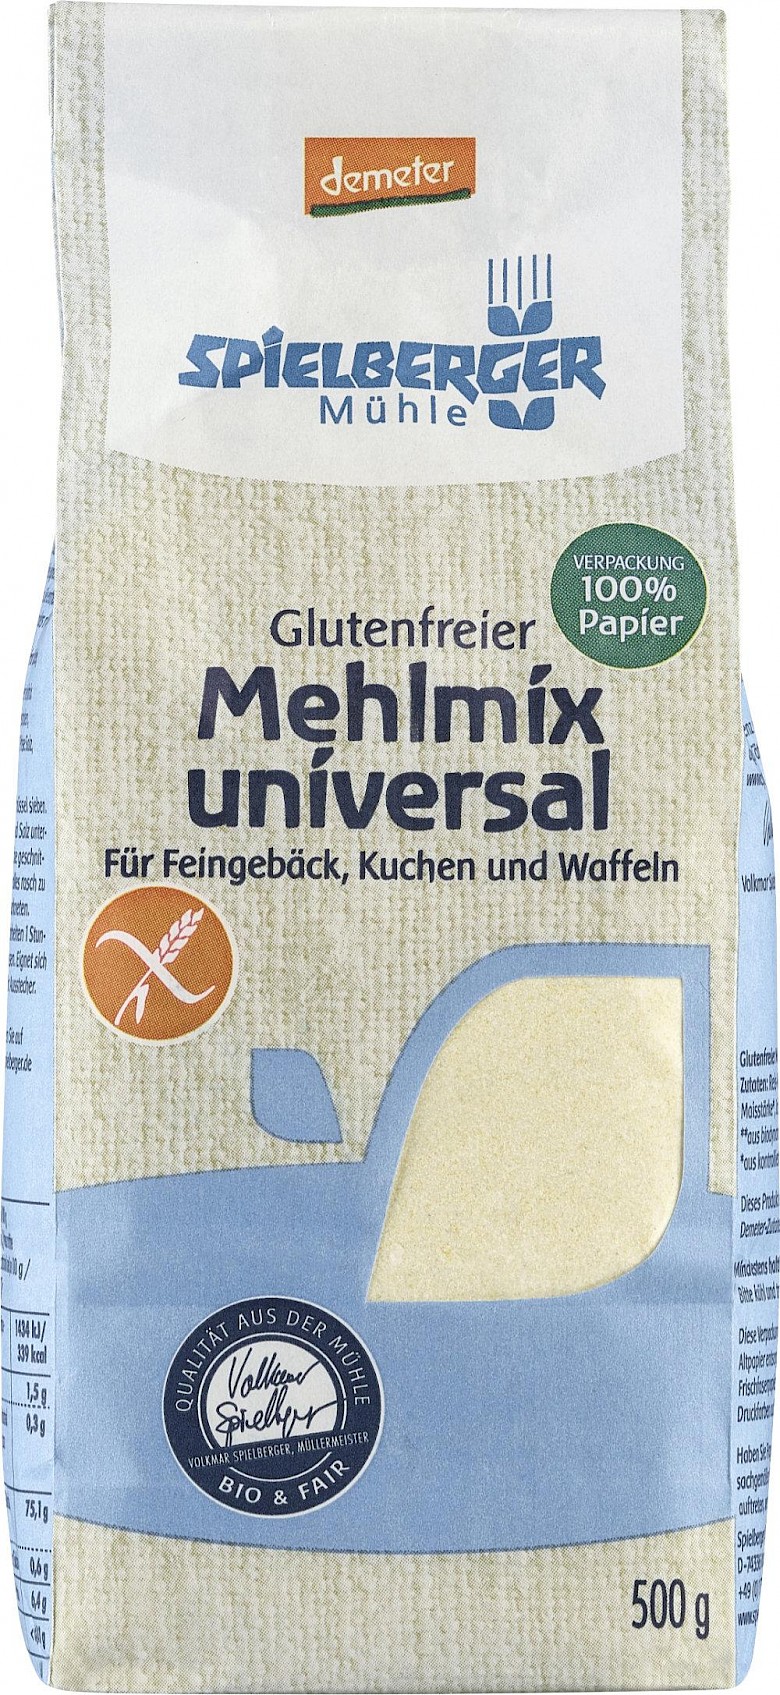 Bio Glutenfreier Mehlmix Universal 500g